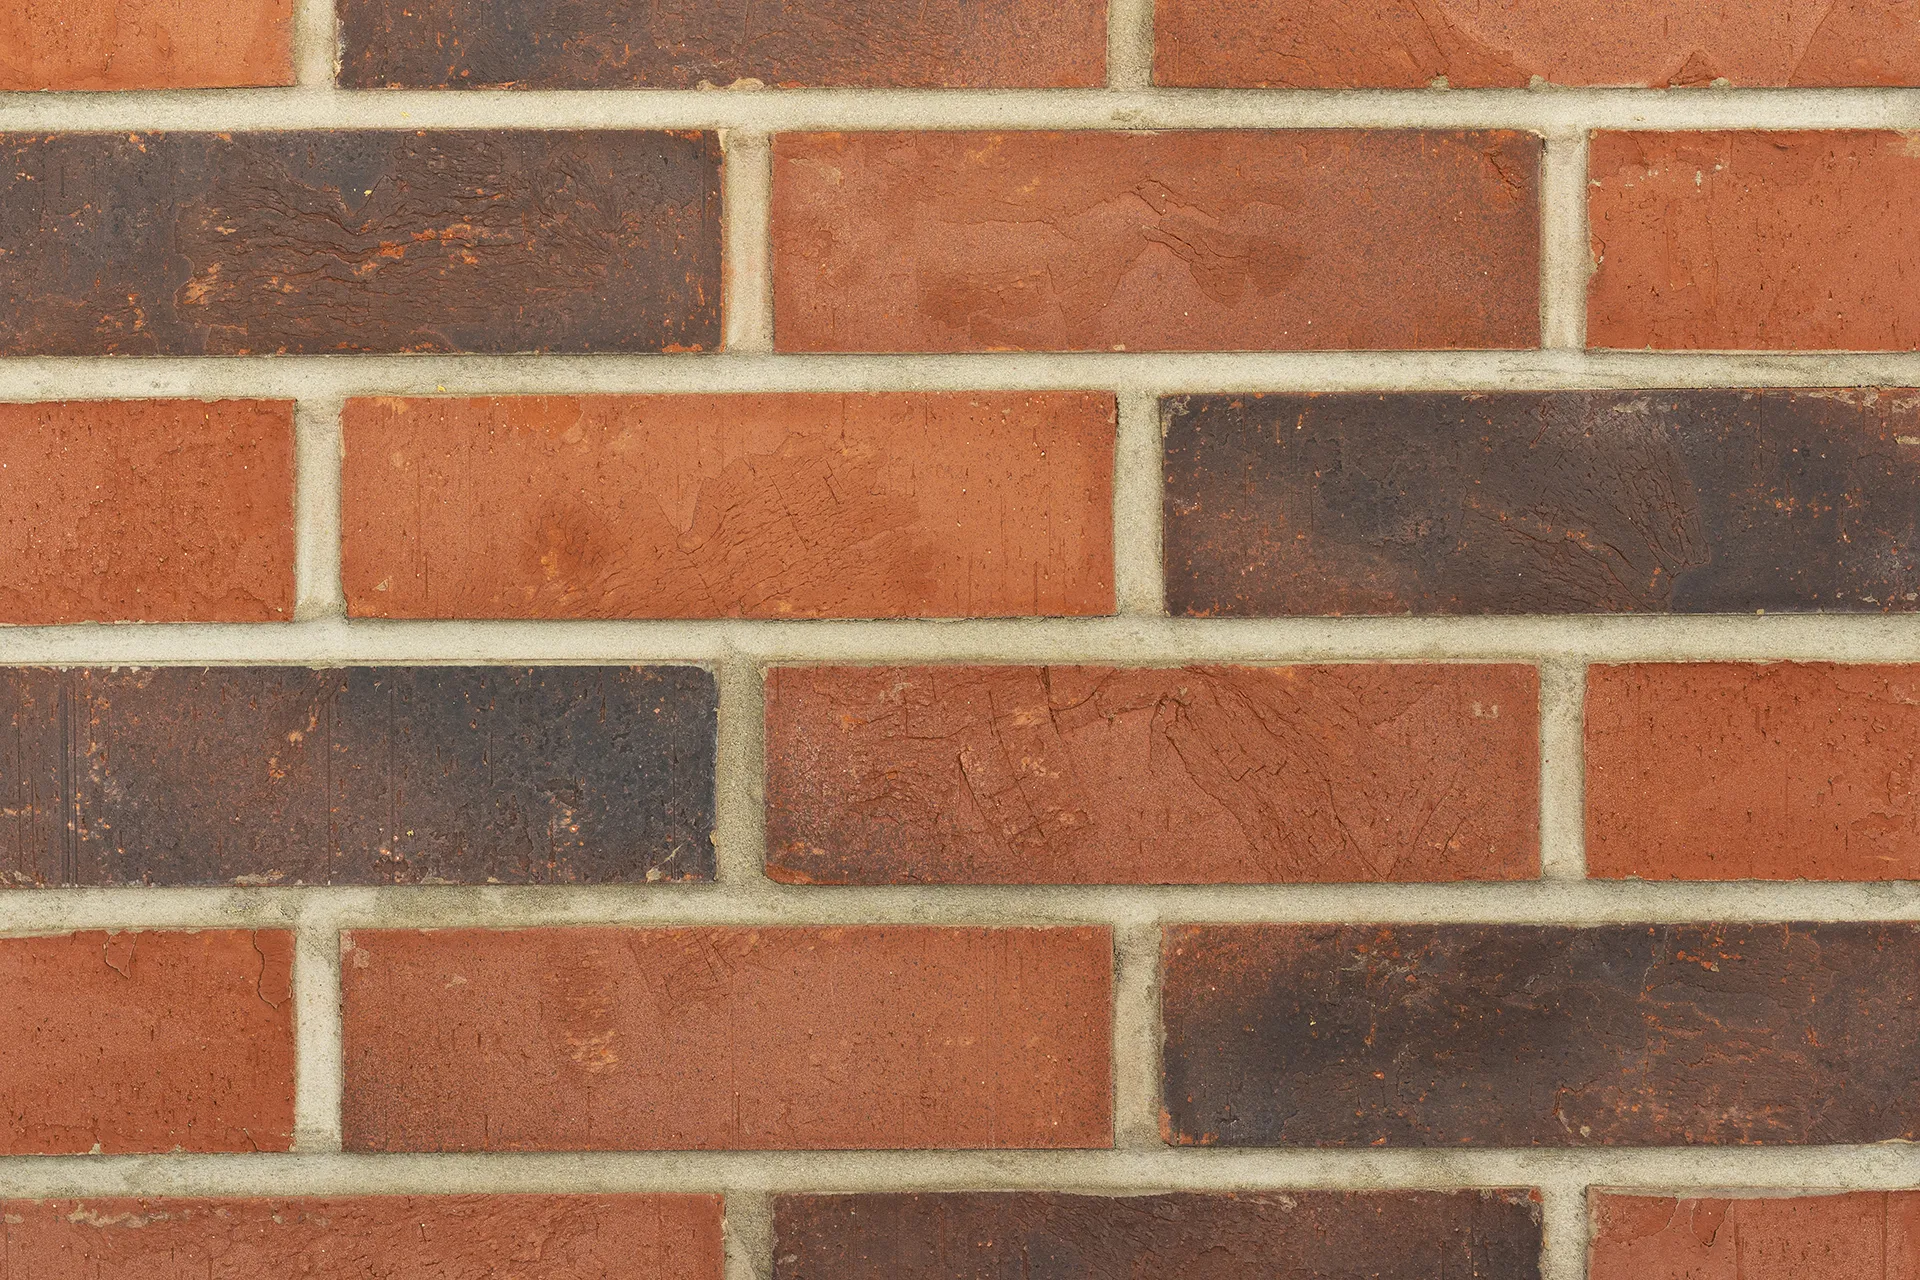 Cedarwood bricks